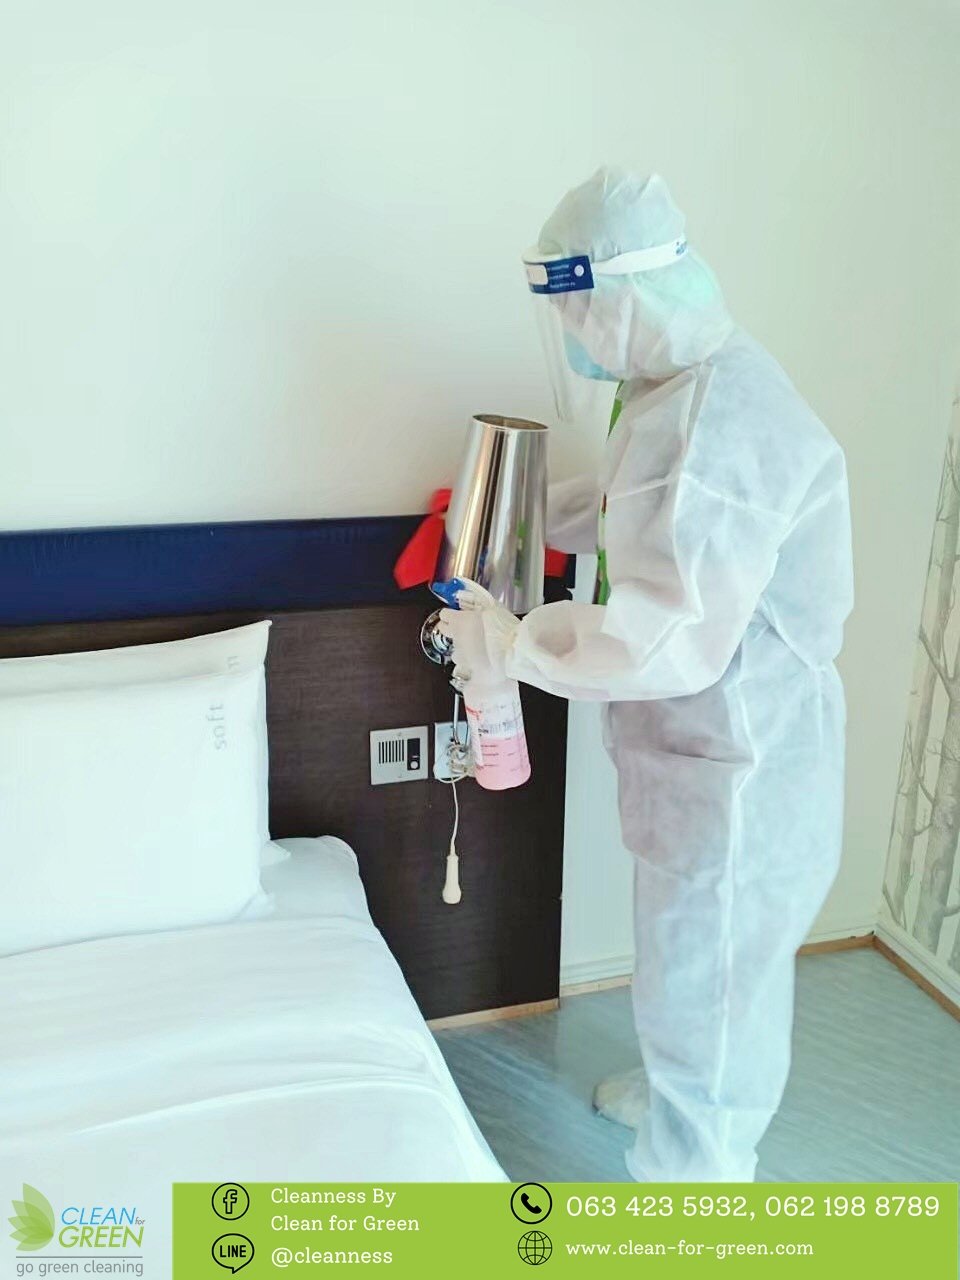 Special cleaning Hospitel / Alternative State Quarantine (ASQ) 